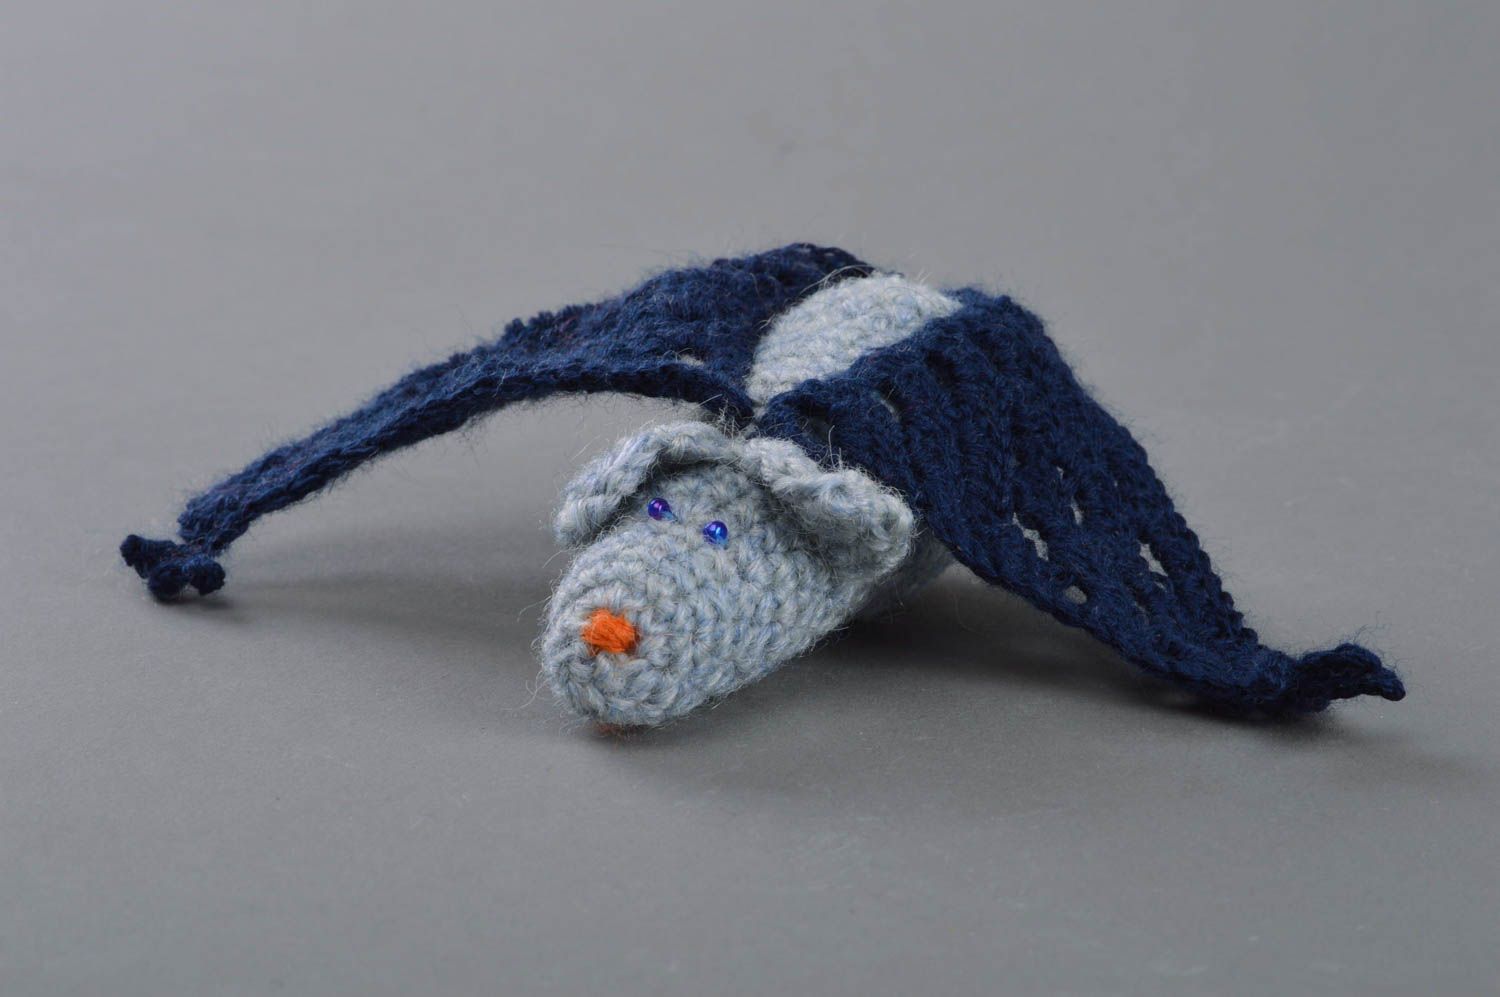 Handmade crocheted toy blue bat small cute baby doll nursery decor ideas photo 1